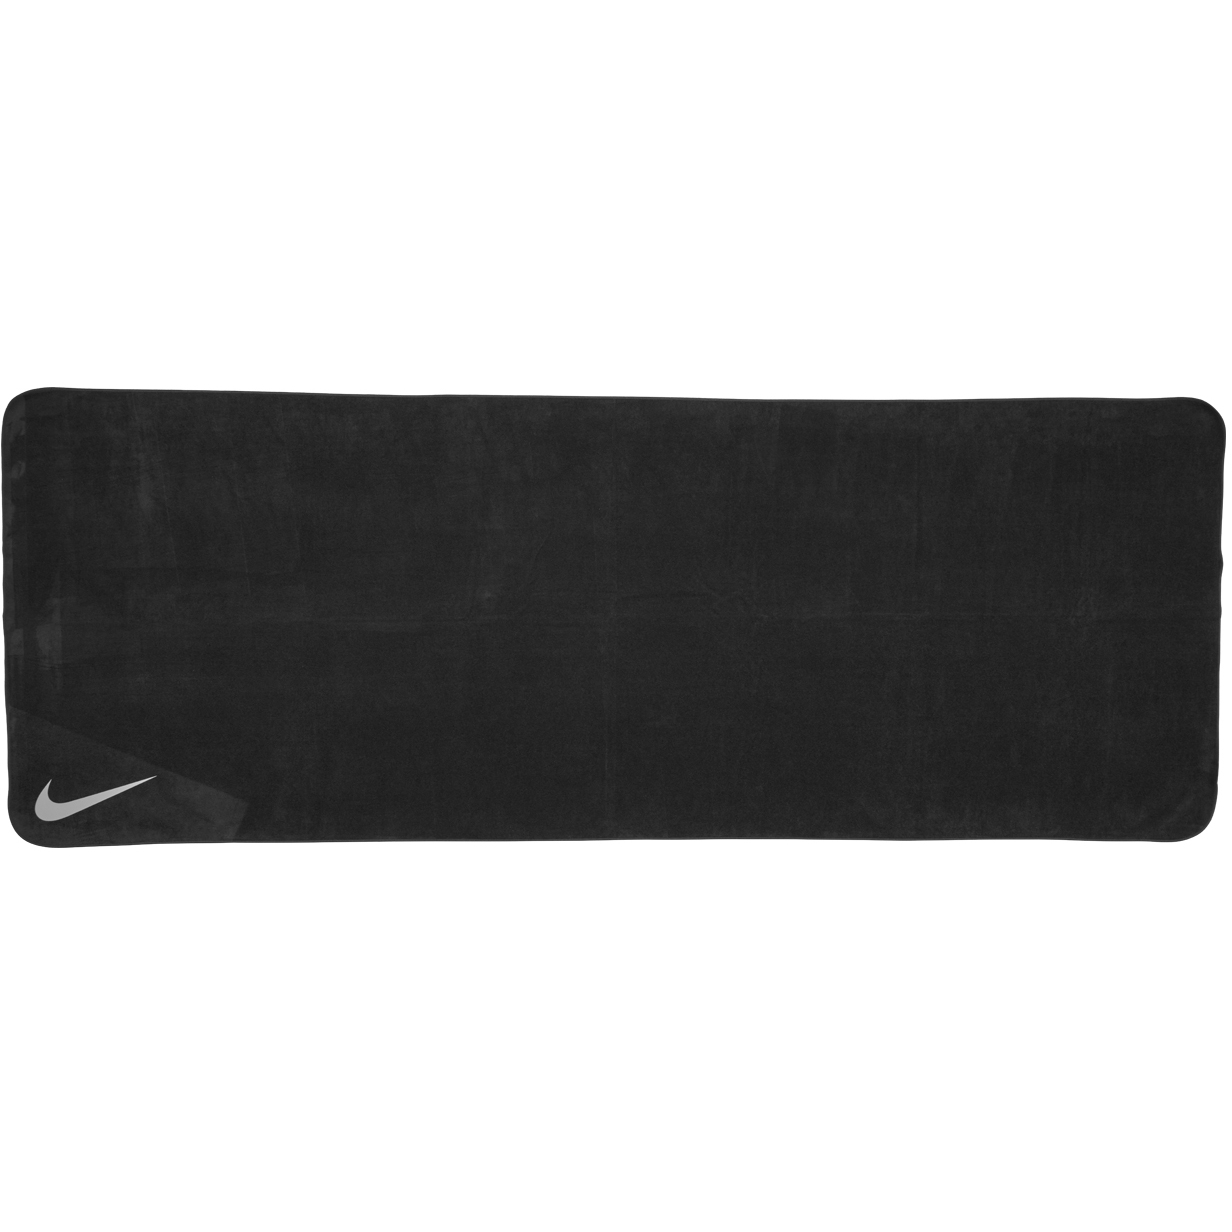 Picture of Nike Yoga Towel - anthracite/medium grey 012